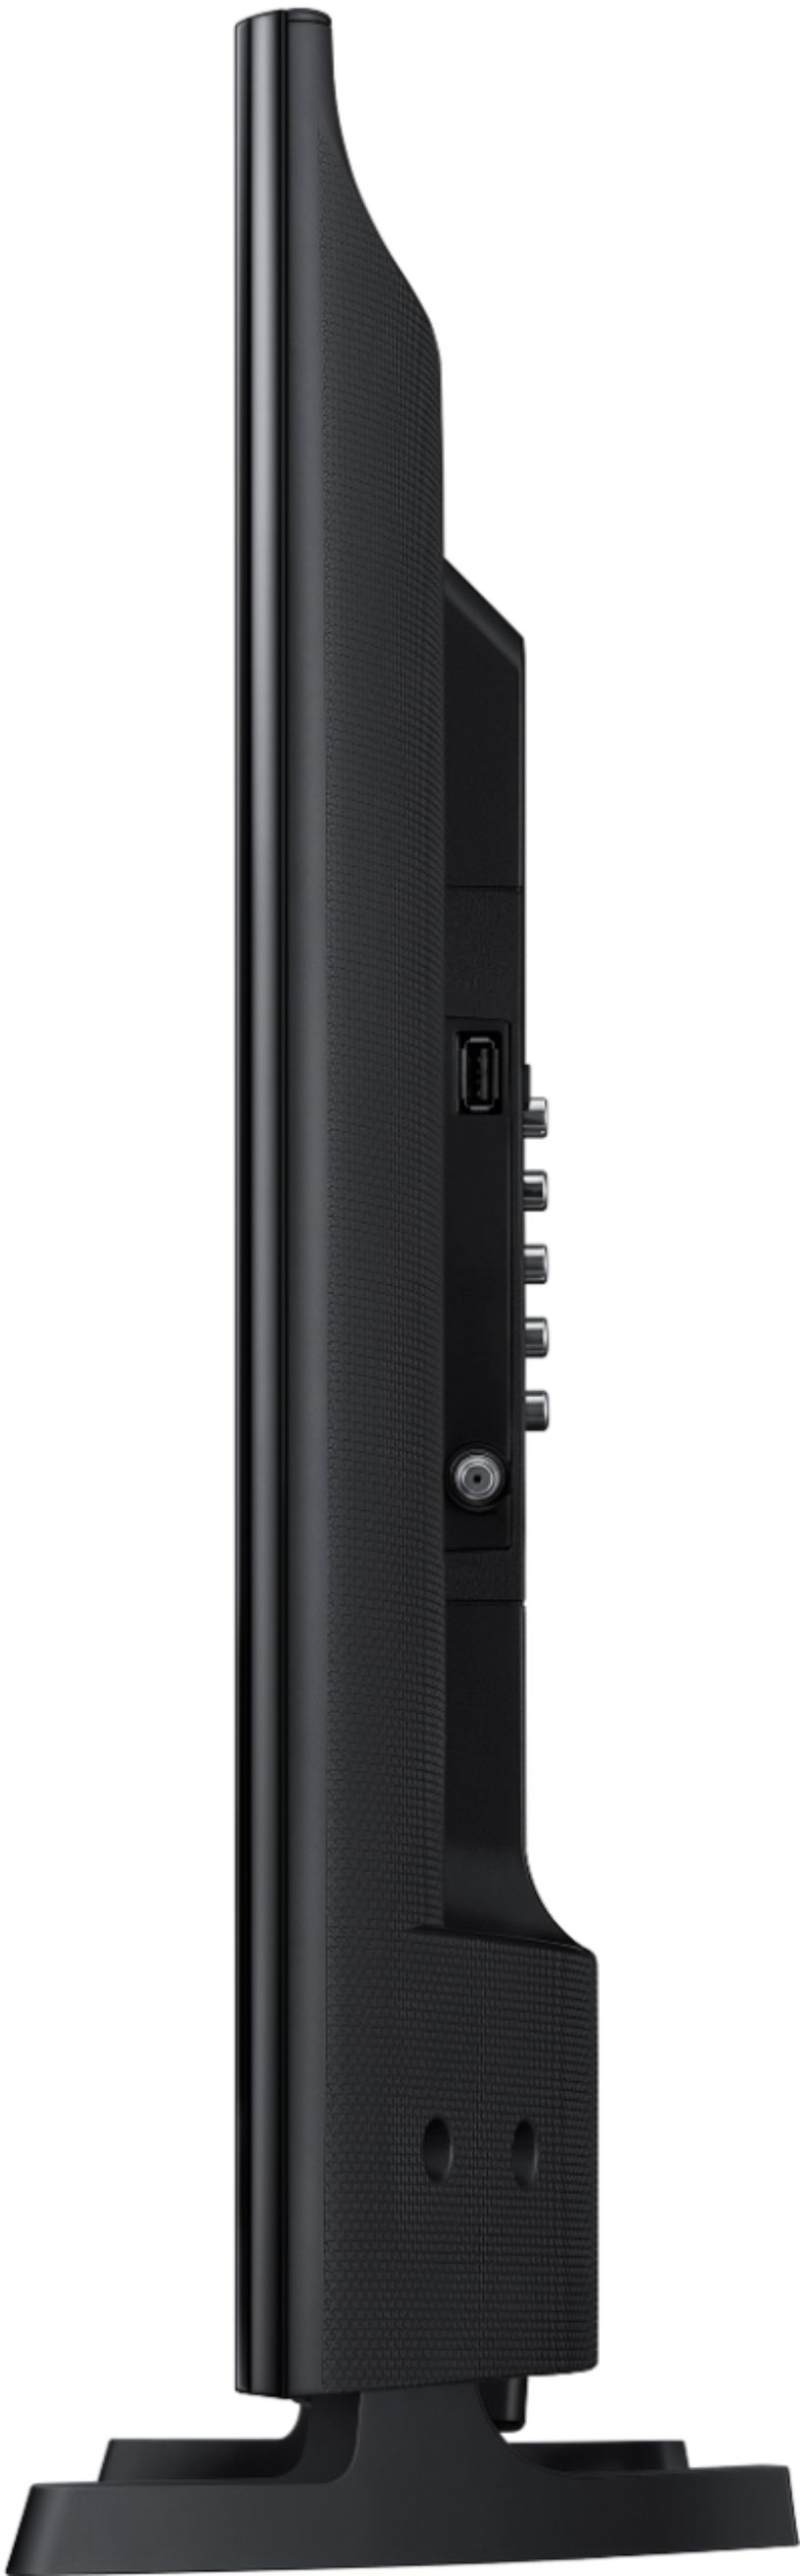 Samsung 4 Series UN32M4500BF - 32 LED Smart TV - 720p - Black